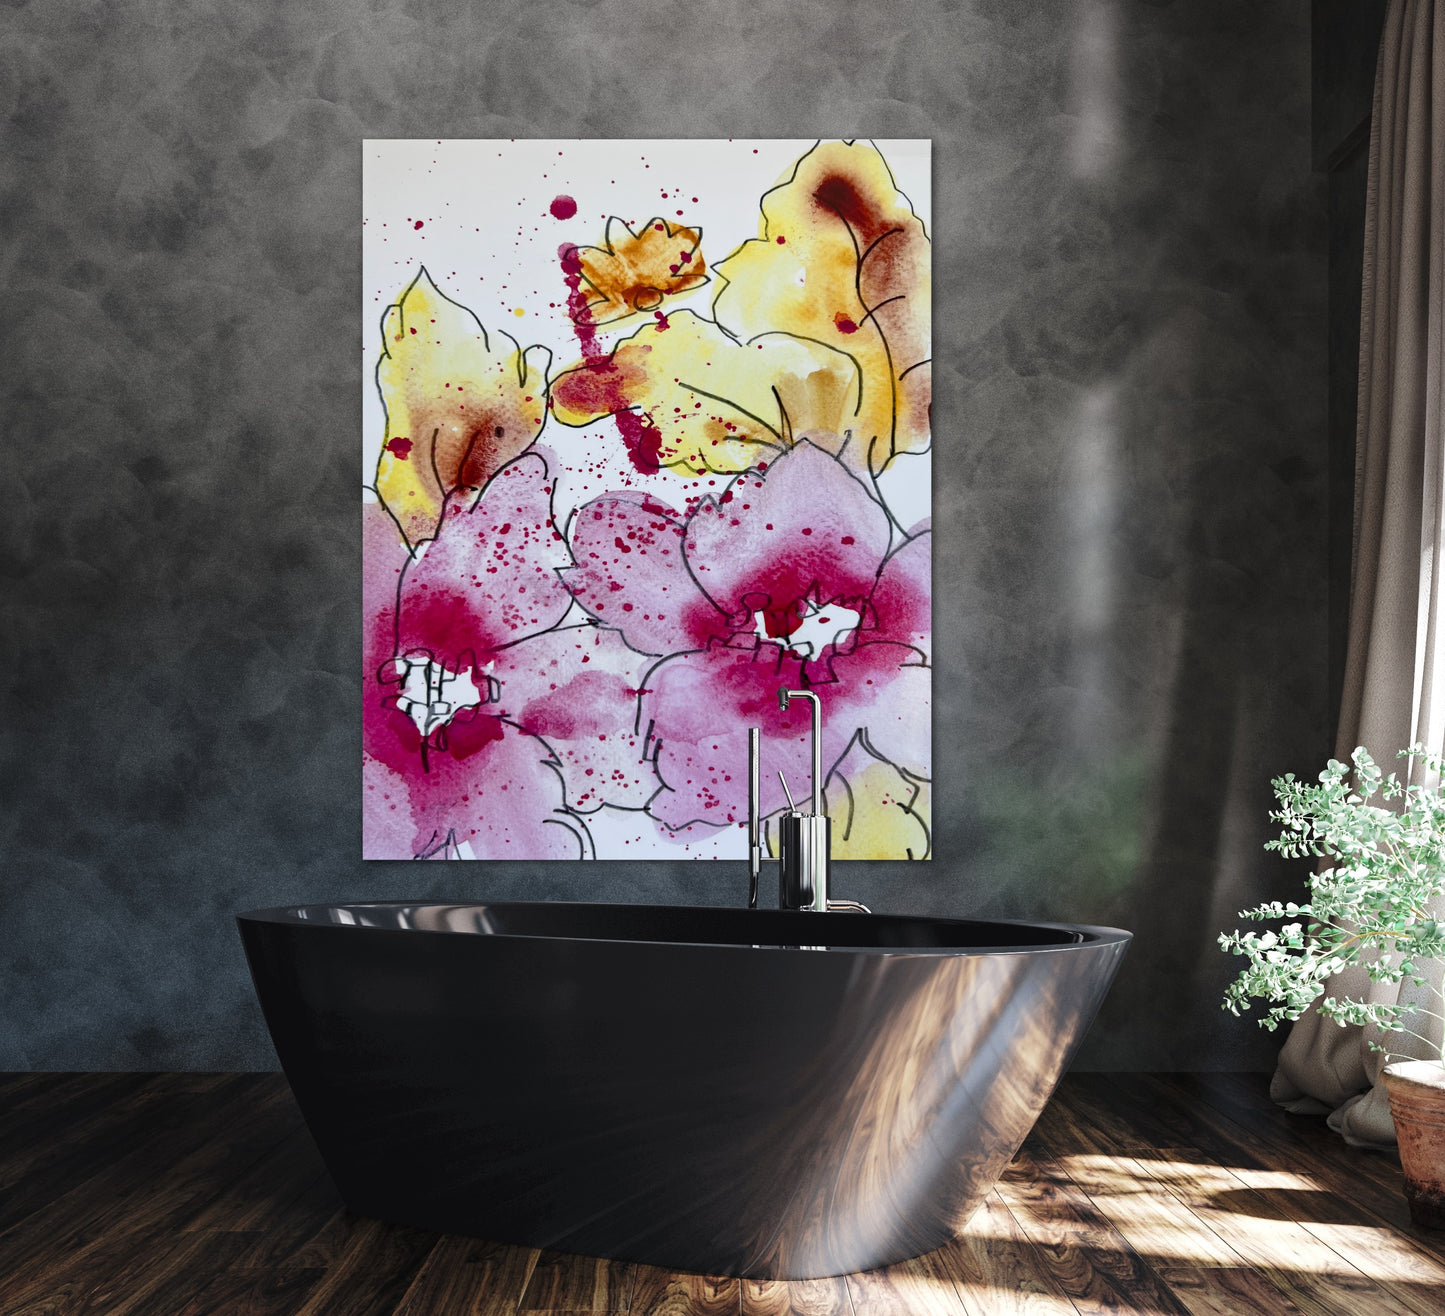 Two Pink Flowers - fine prints of original artwork